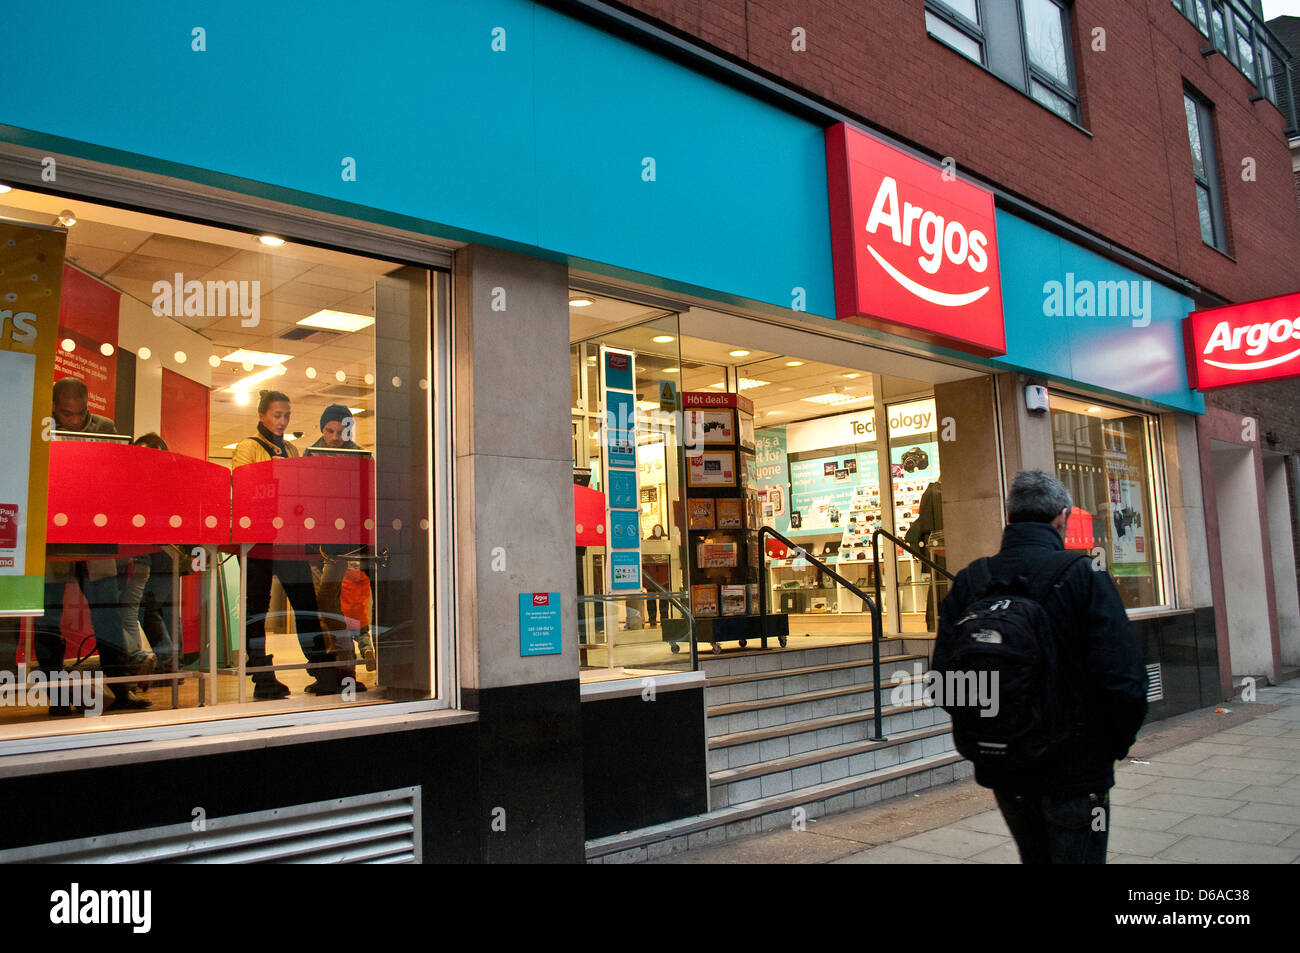 Argos shop in Gray's Inn Road, central London, UK Stock Photo